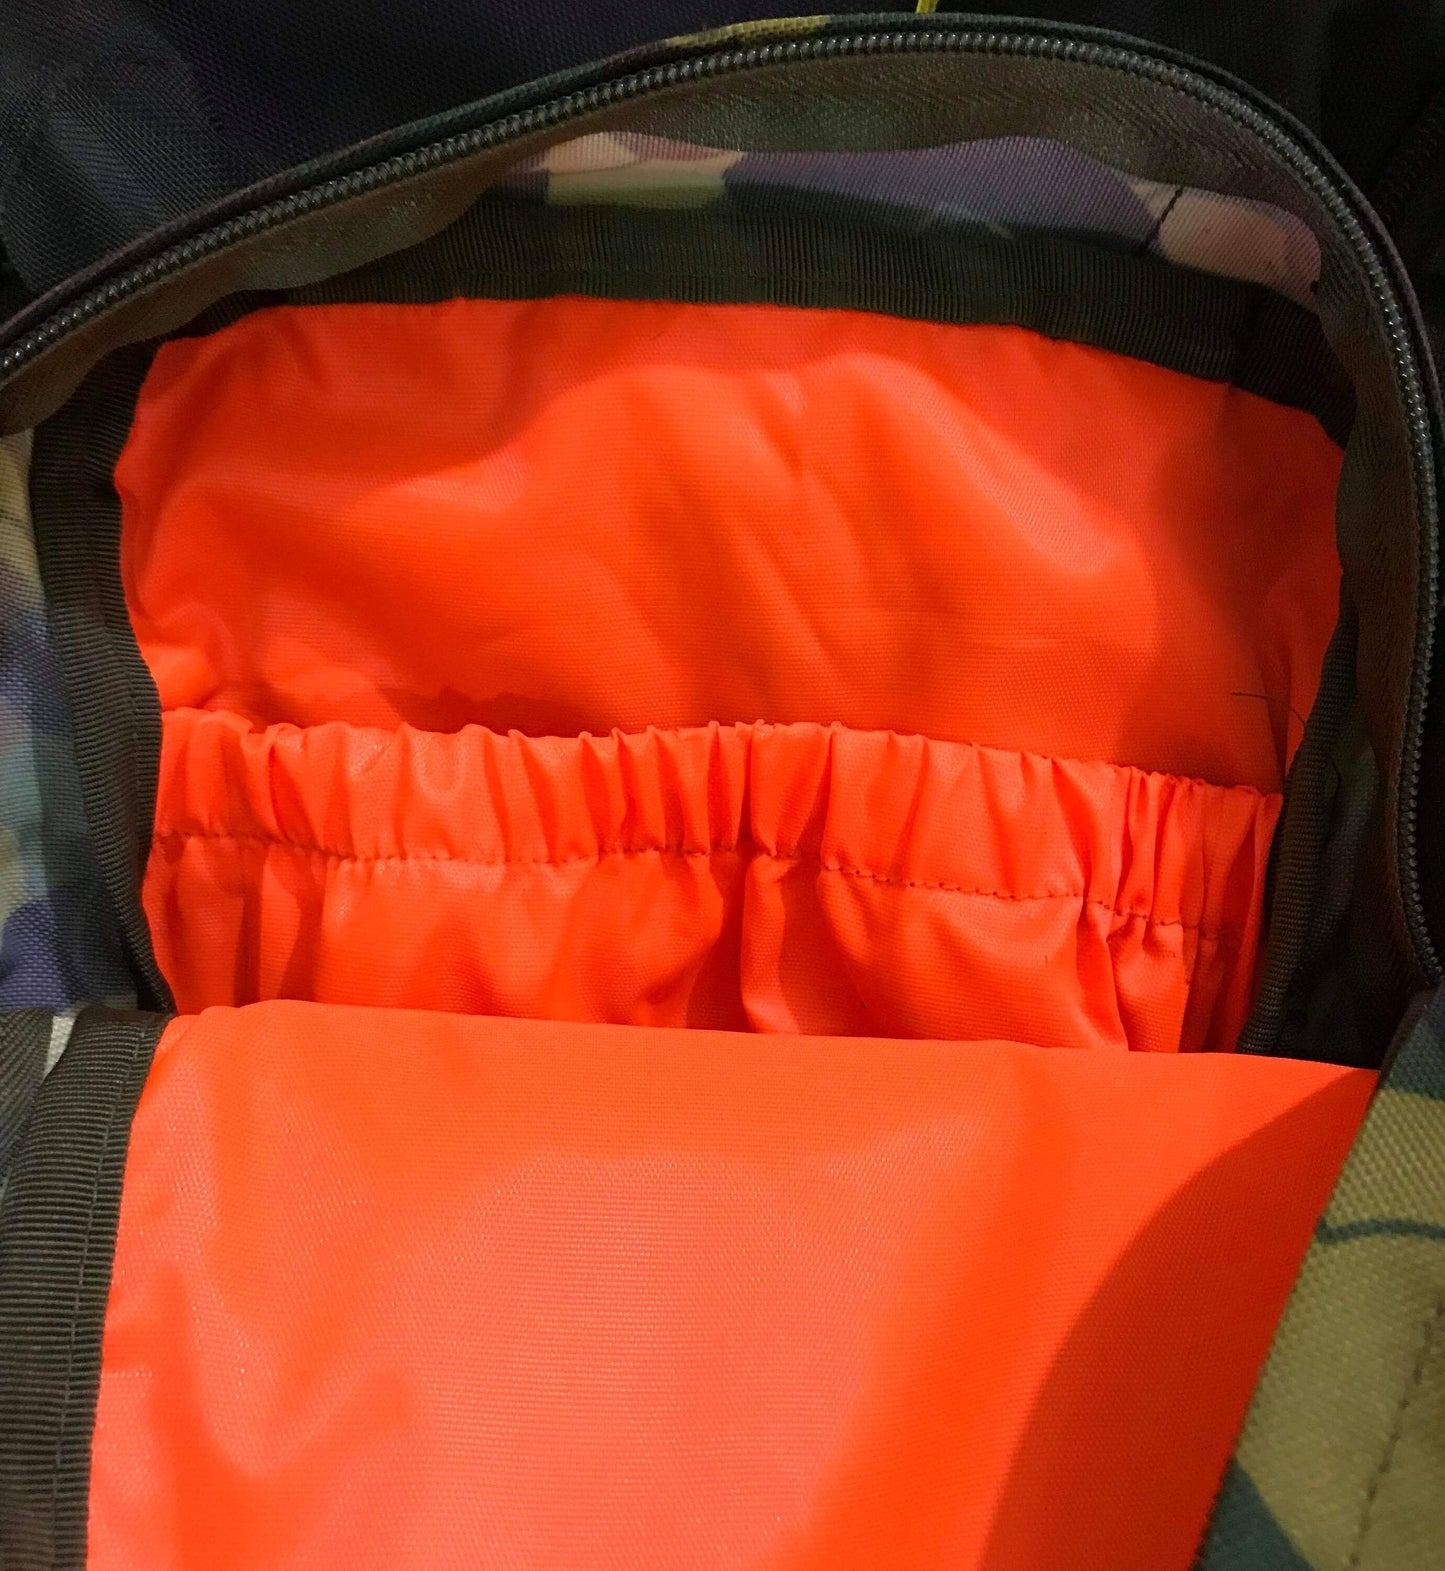 Cockcam "Pecker Pack" Minimap Tactical Backpack - Flectarn inspired Humor Novelty Gift Bag Zipper Pouch